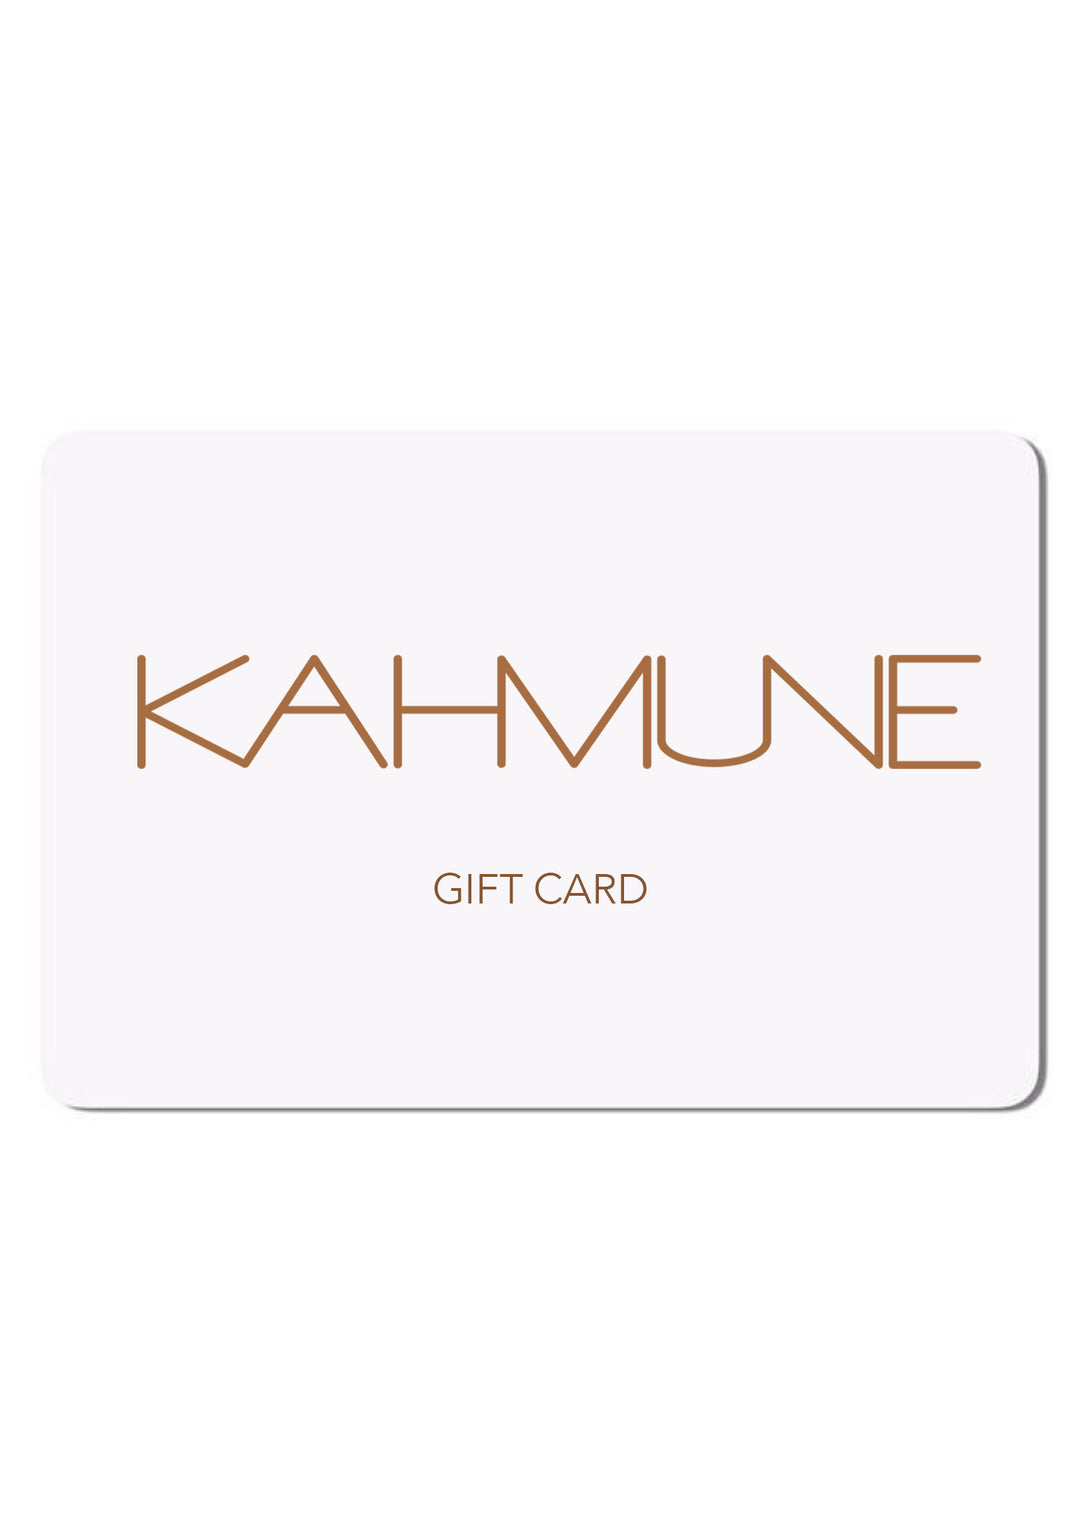 Gift Cards - Kahmune